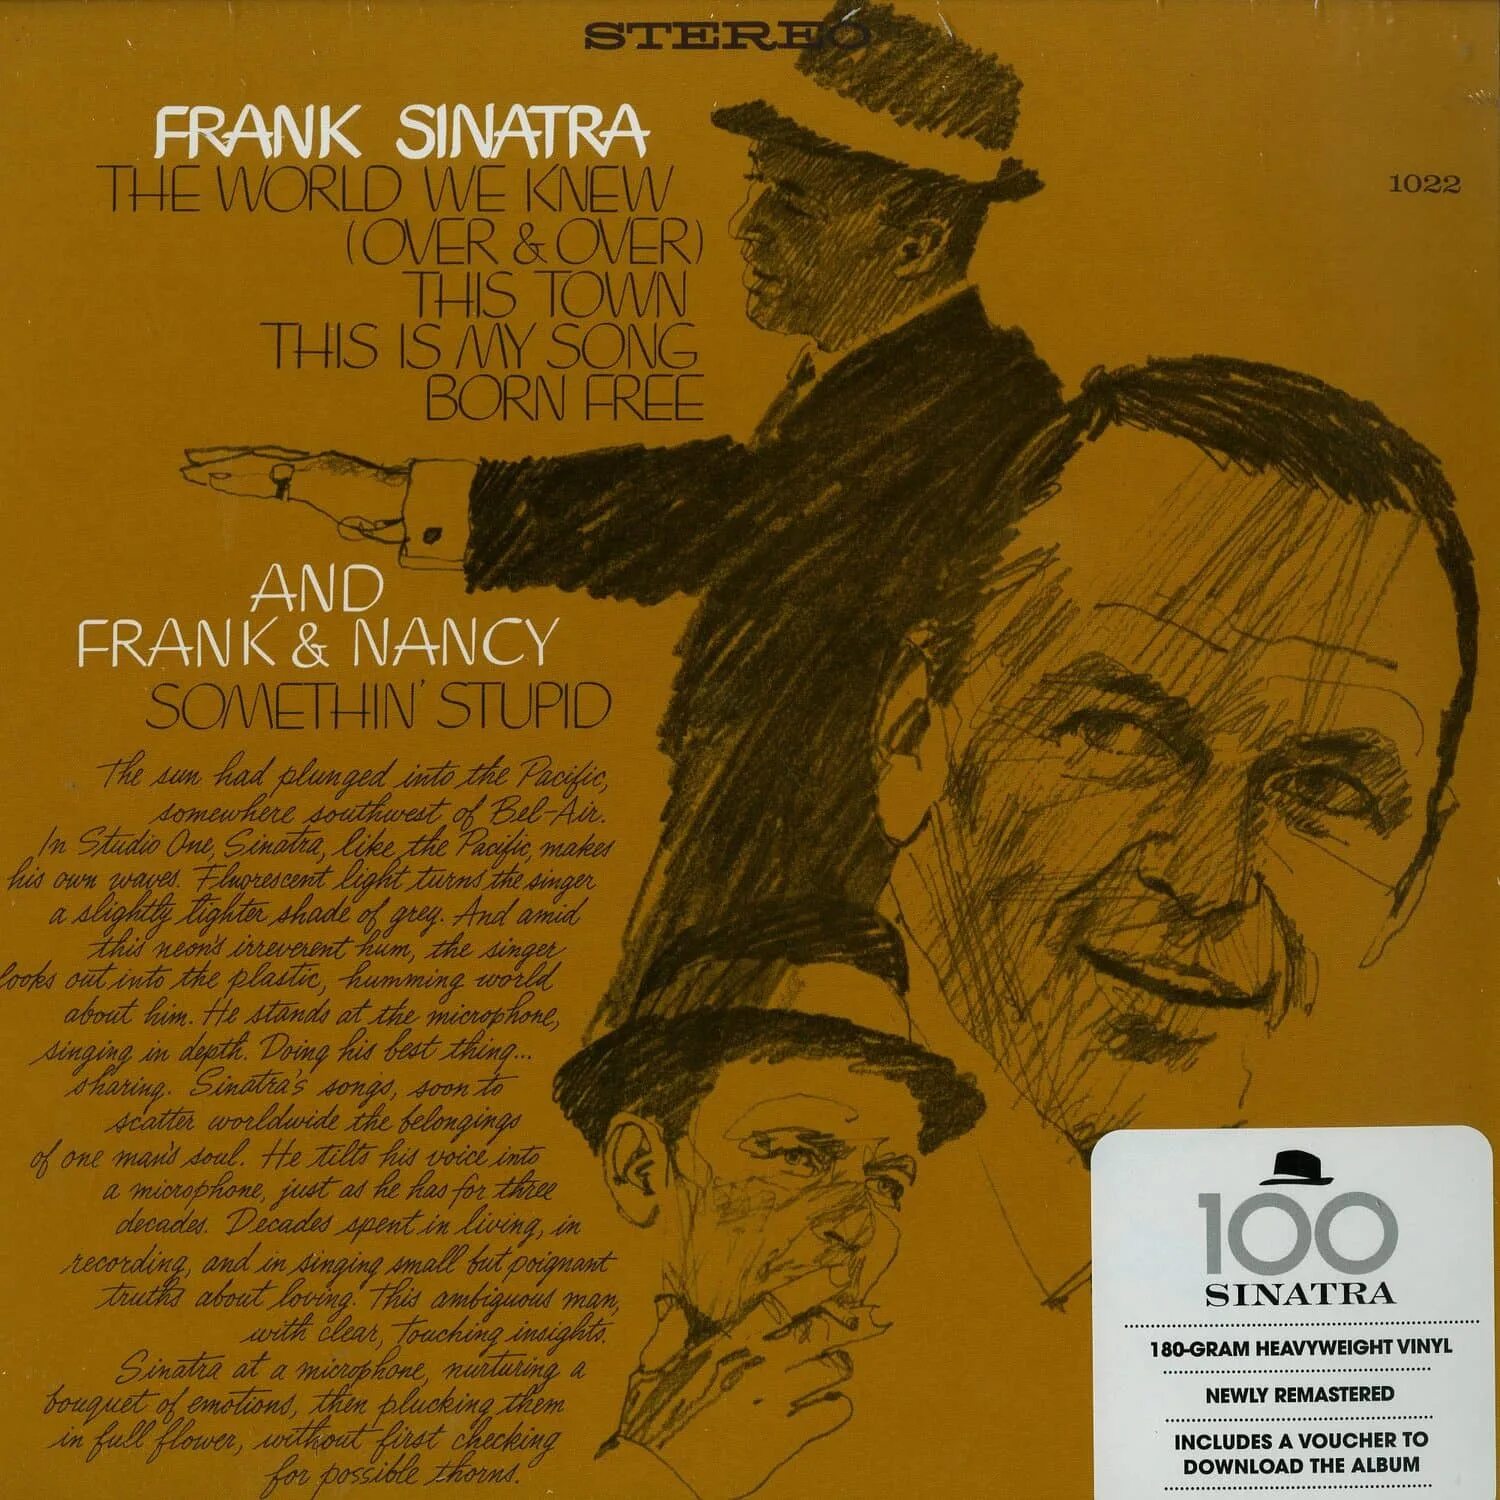 Frank Sinatra - the World we knew. Виниловая пластинка Frank Sinatra. Фрэнк Синатра пластинка World we knew. Frank Sinatra - the World we knew (1967) Ноты.